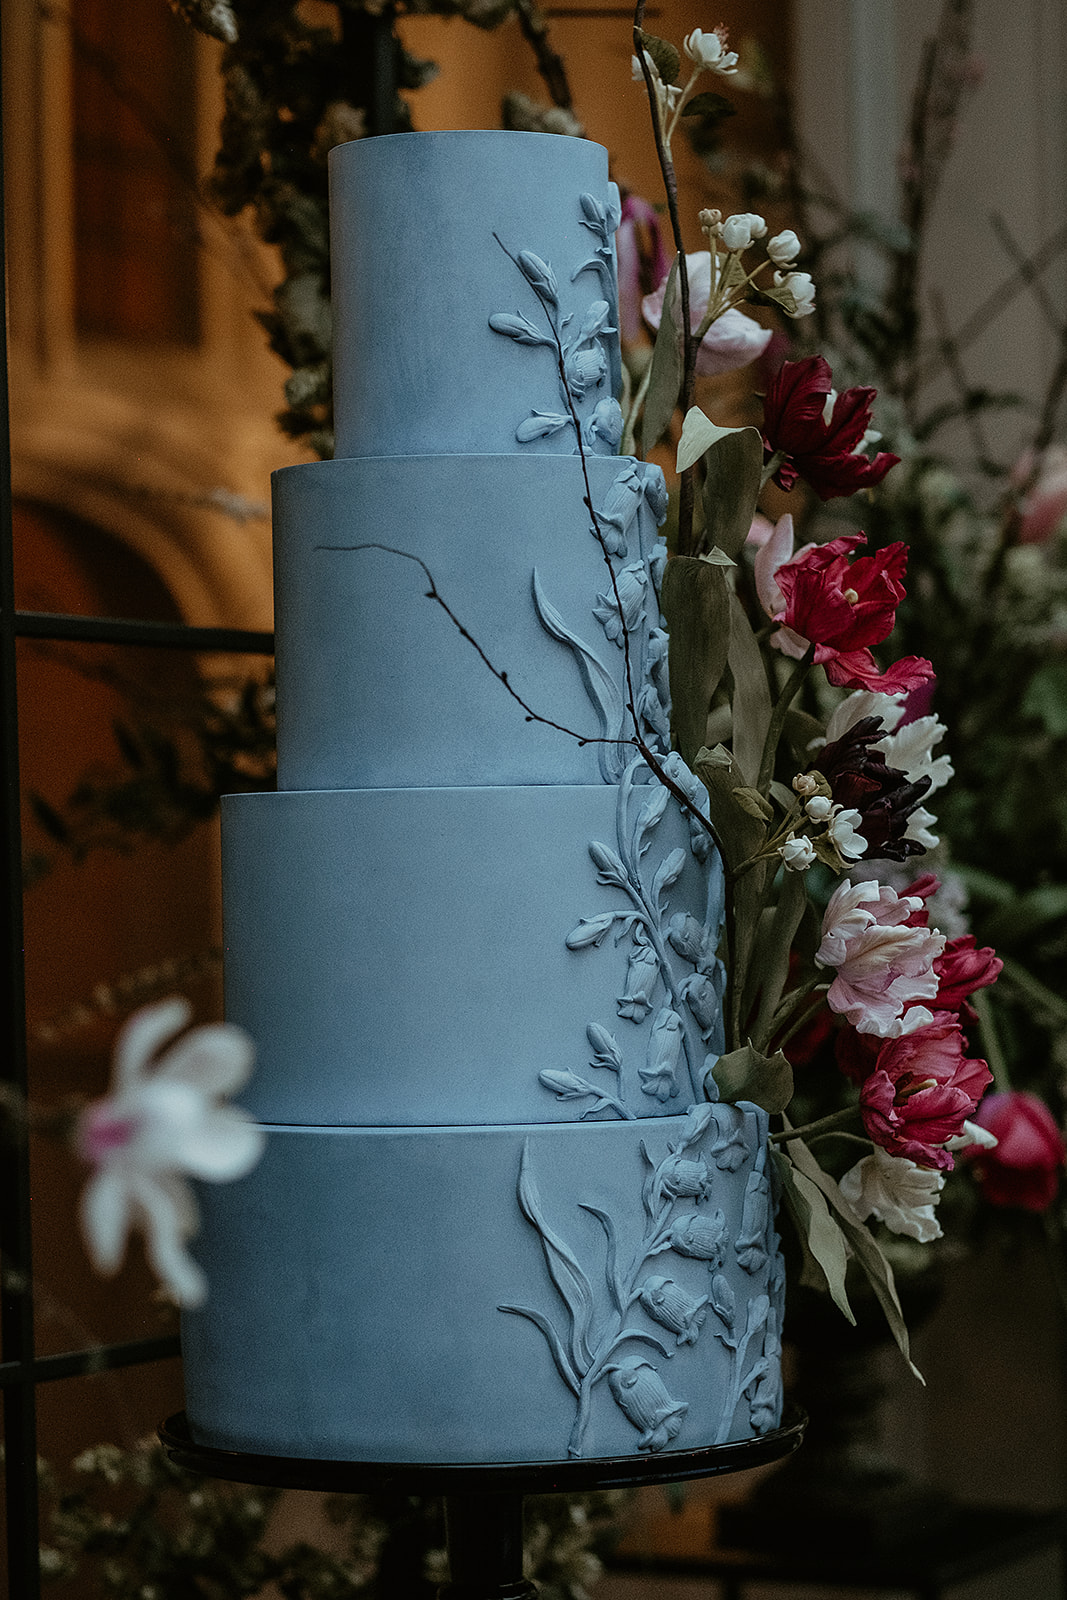 Bluebell wedding cake by Ben The Cake Man at Hampton Mamor.